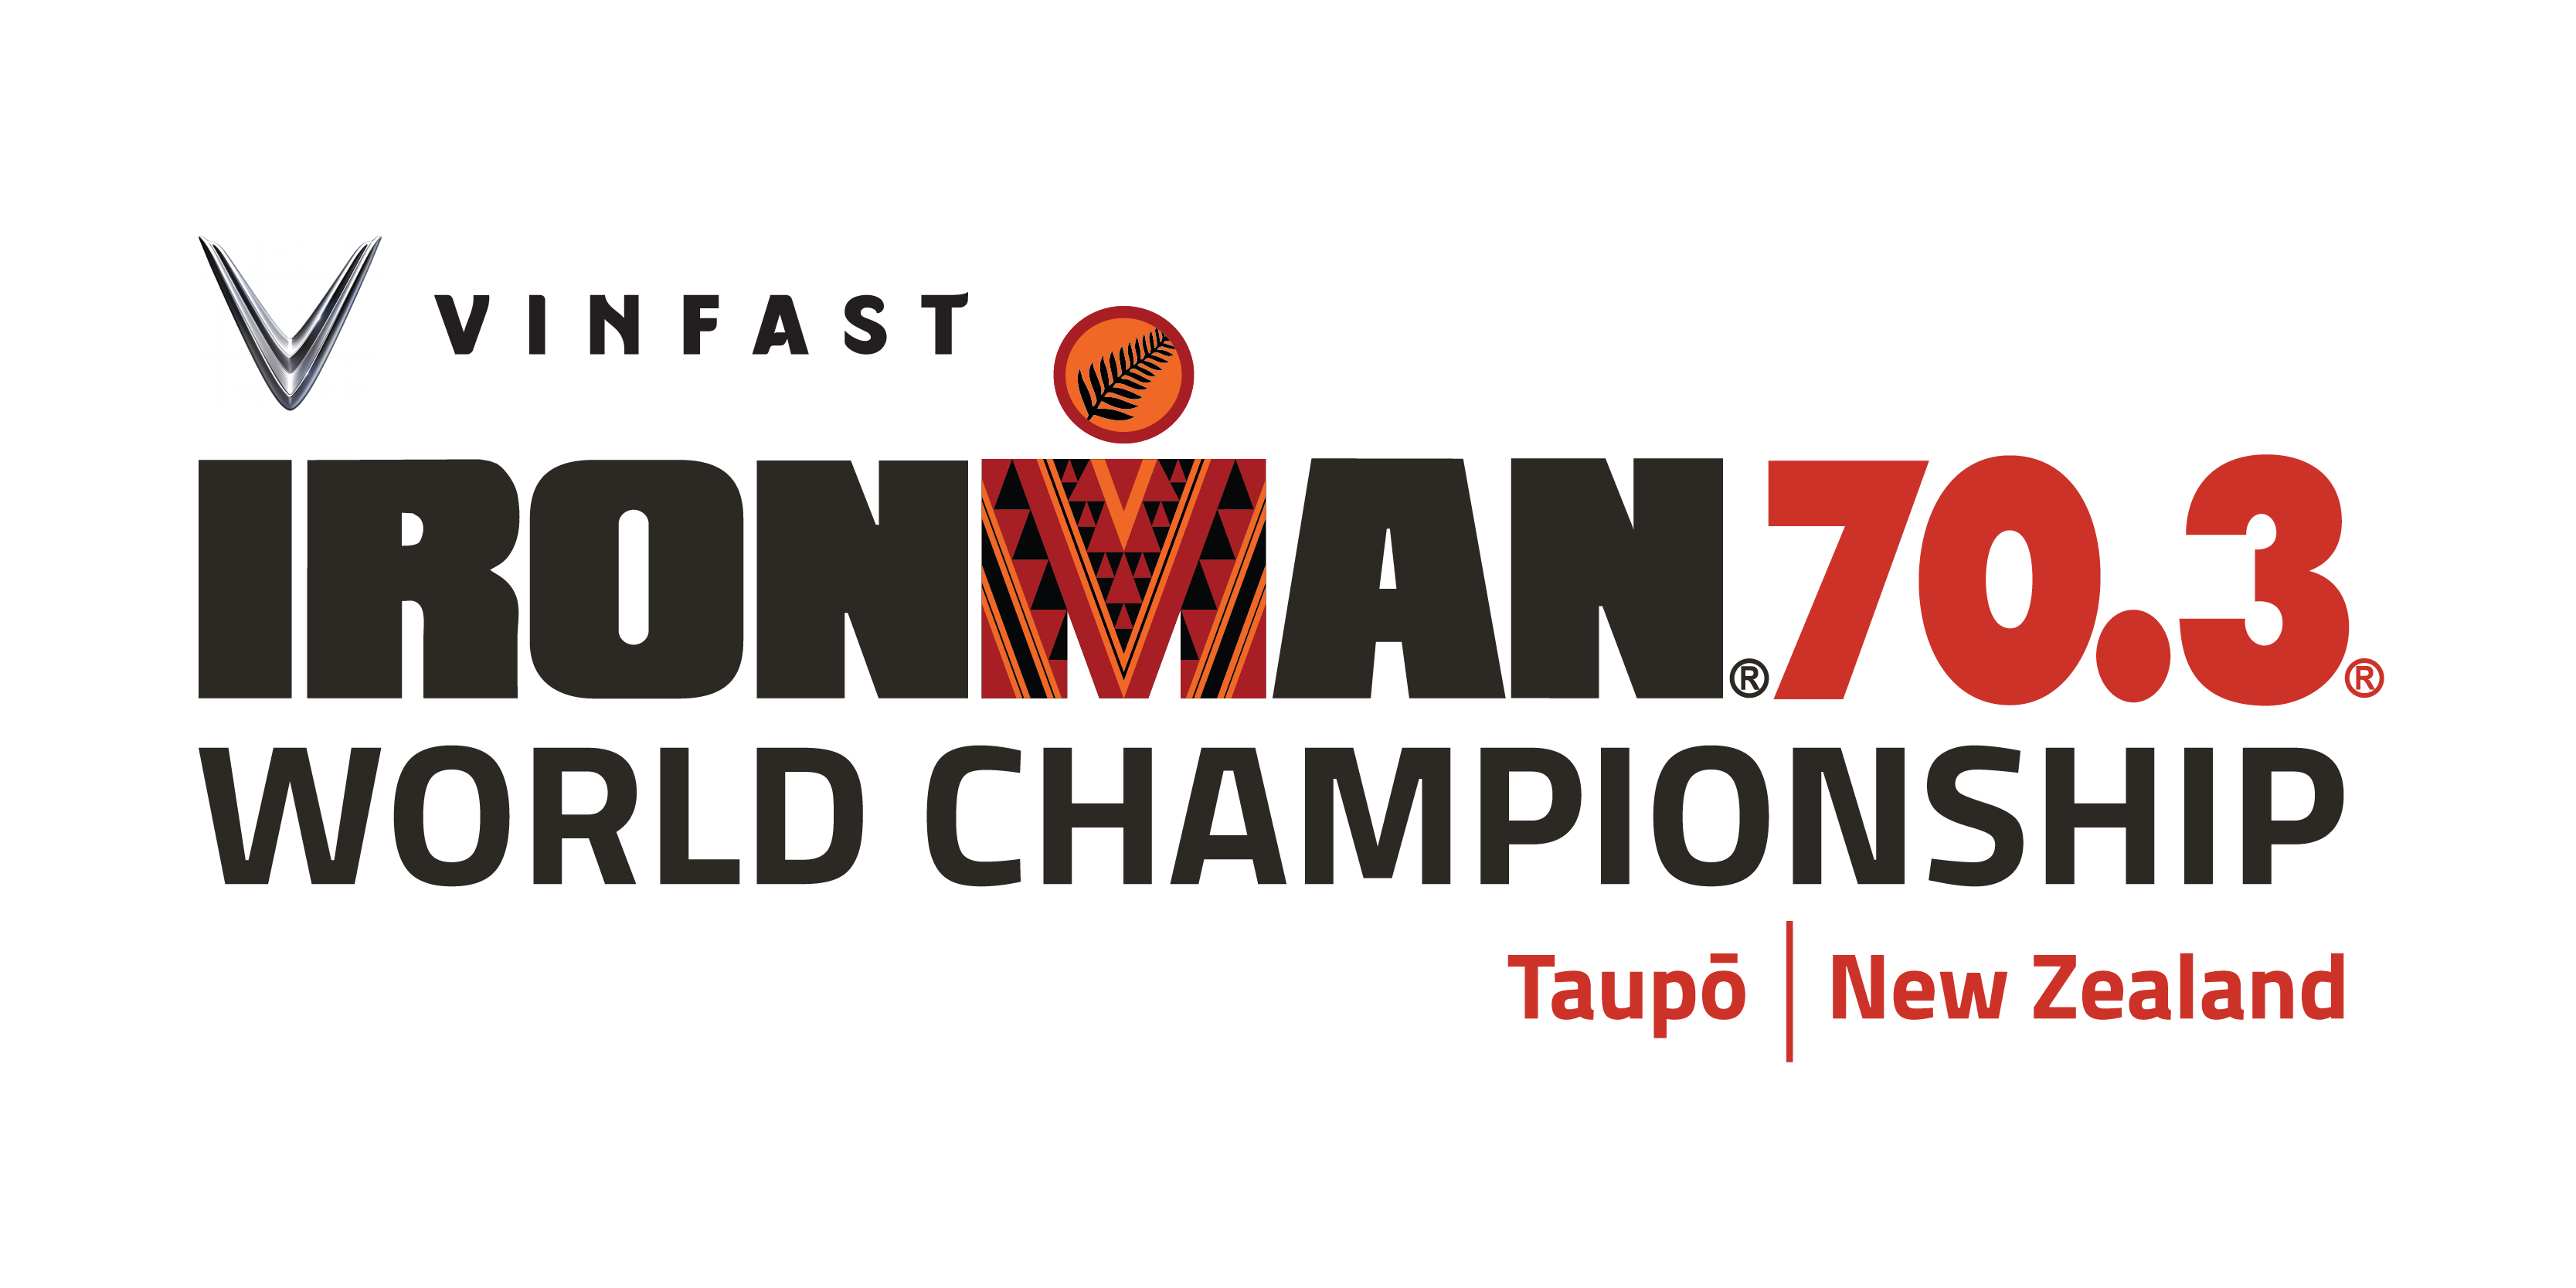 2024 Vinfast IRONMAN 70.3 World Championship Taupo